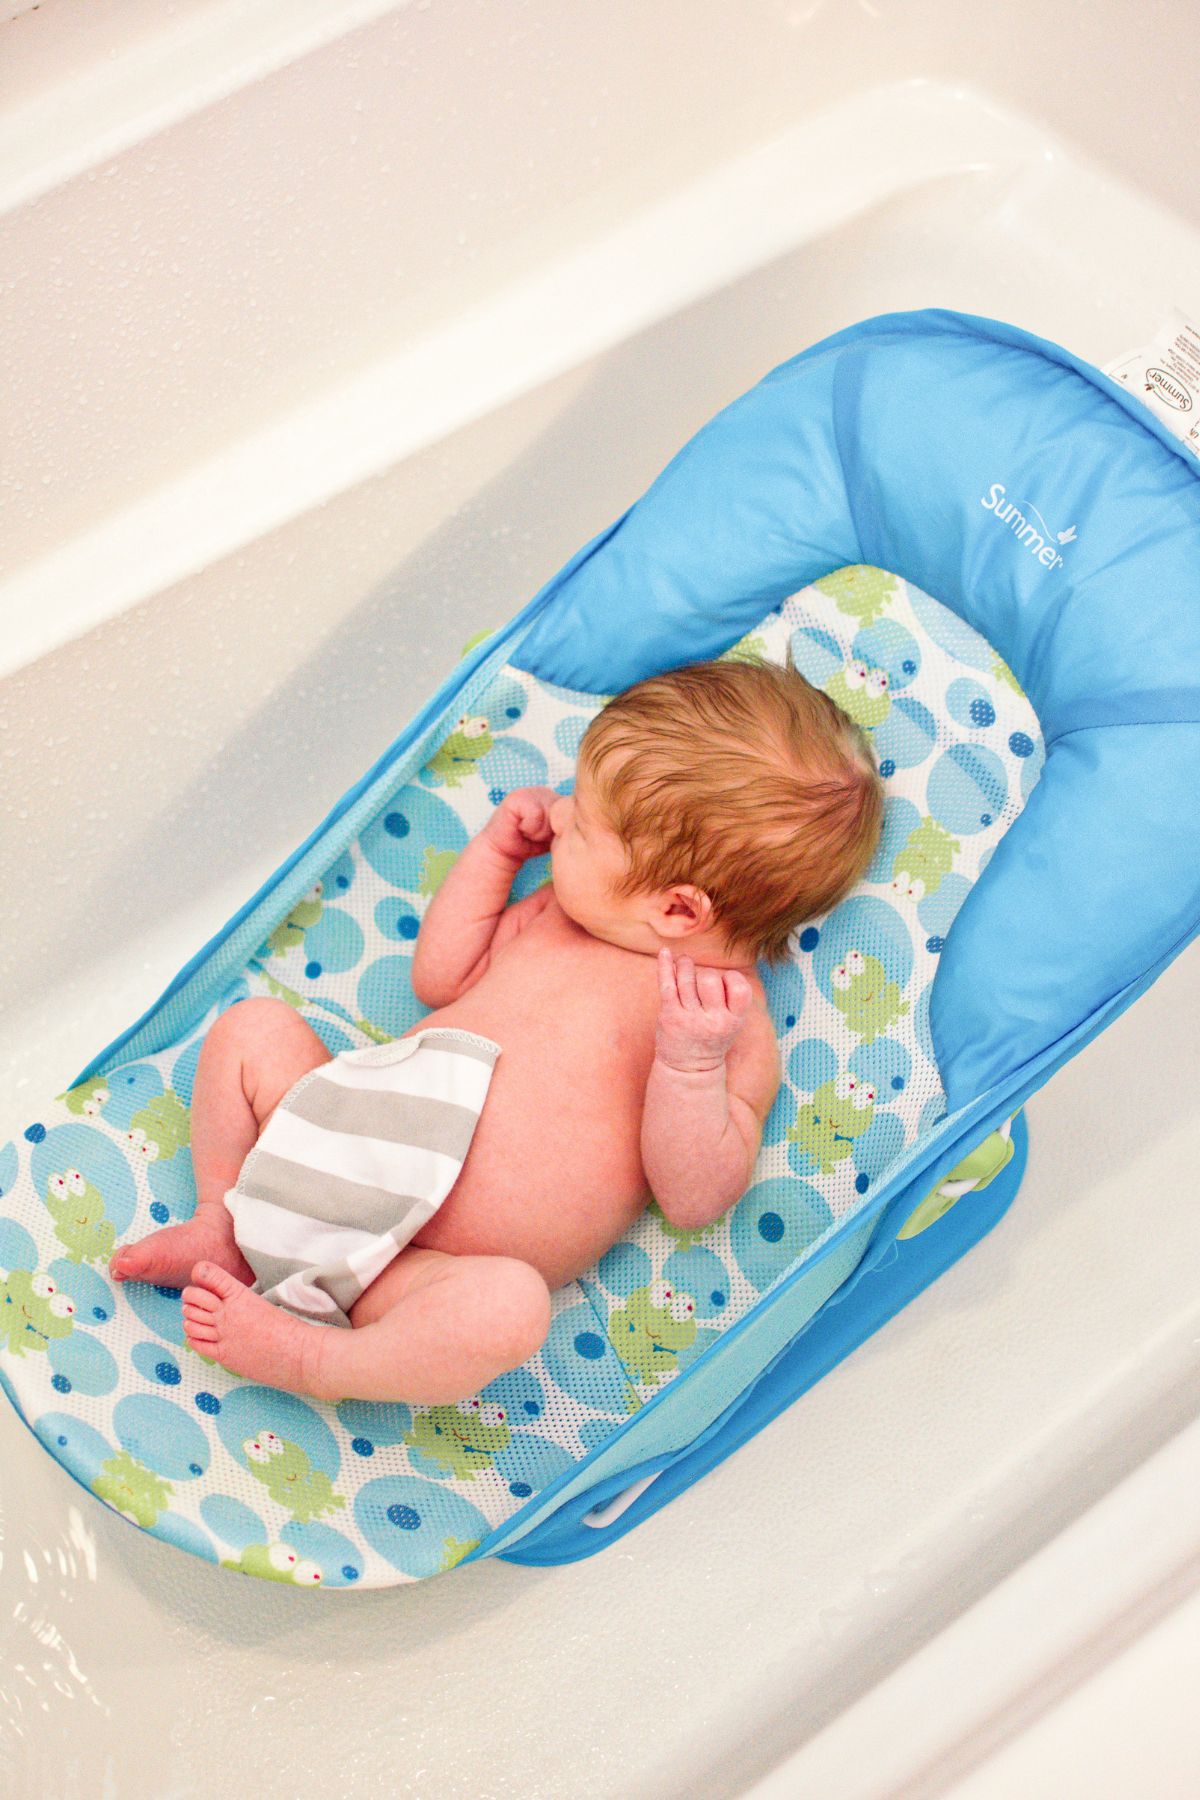 A Baby getting a bath in a green and blue bath chair.